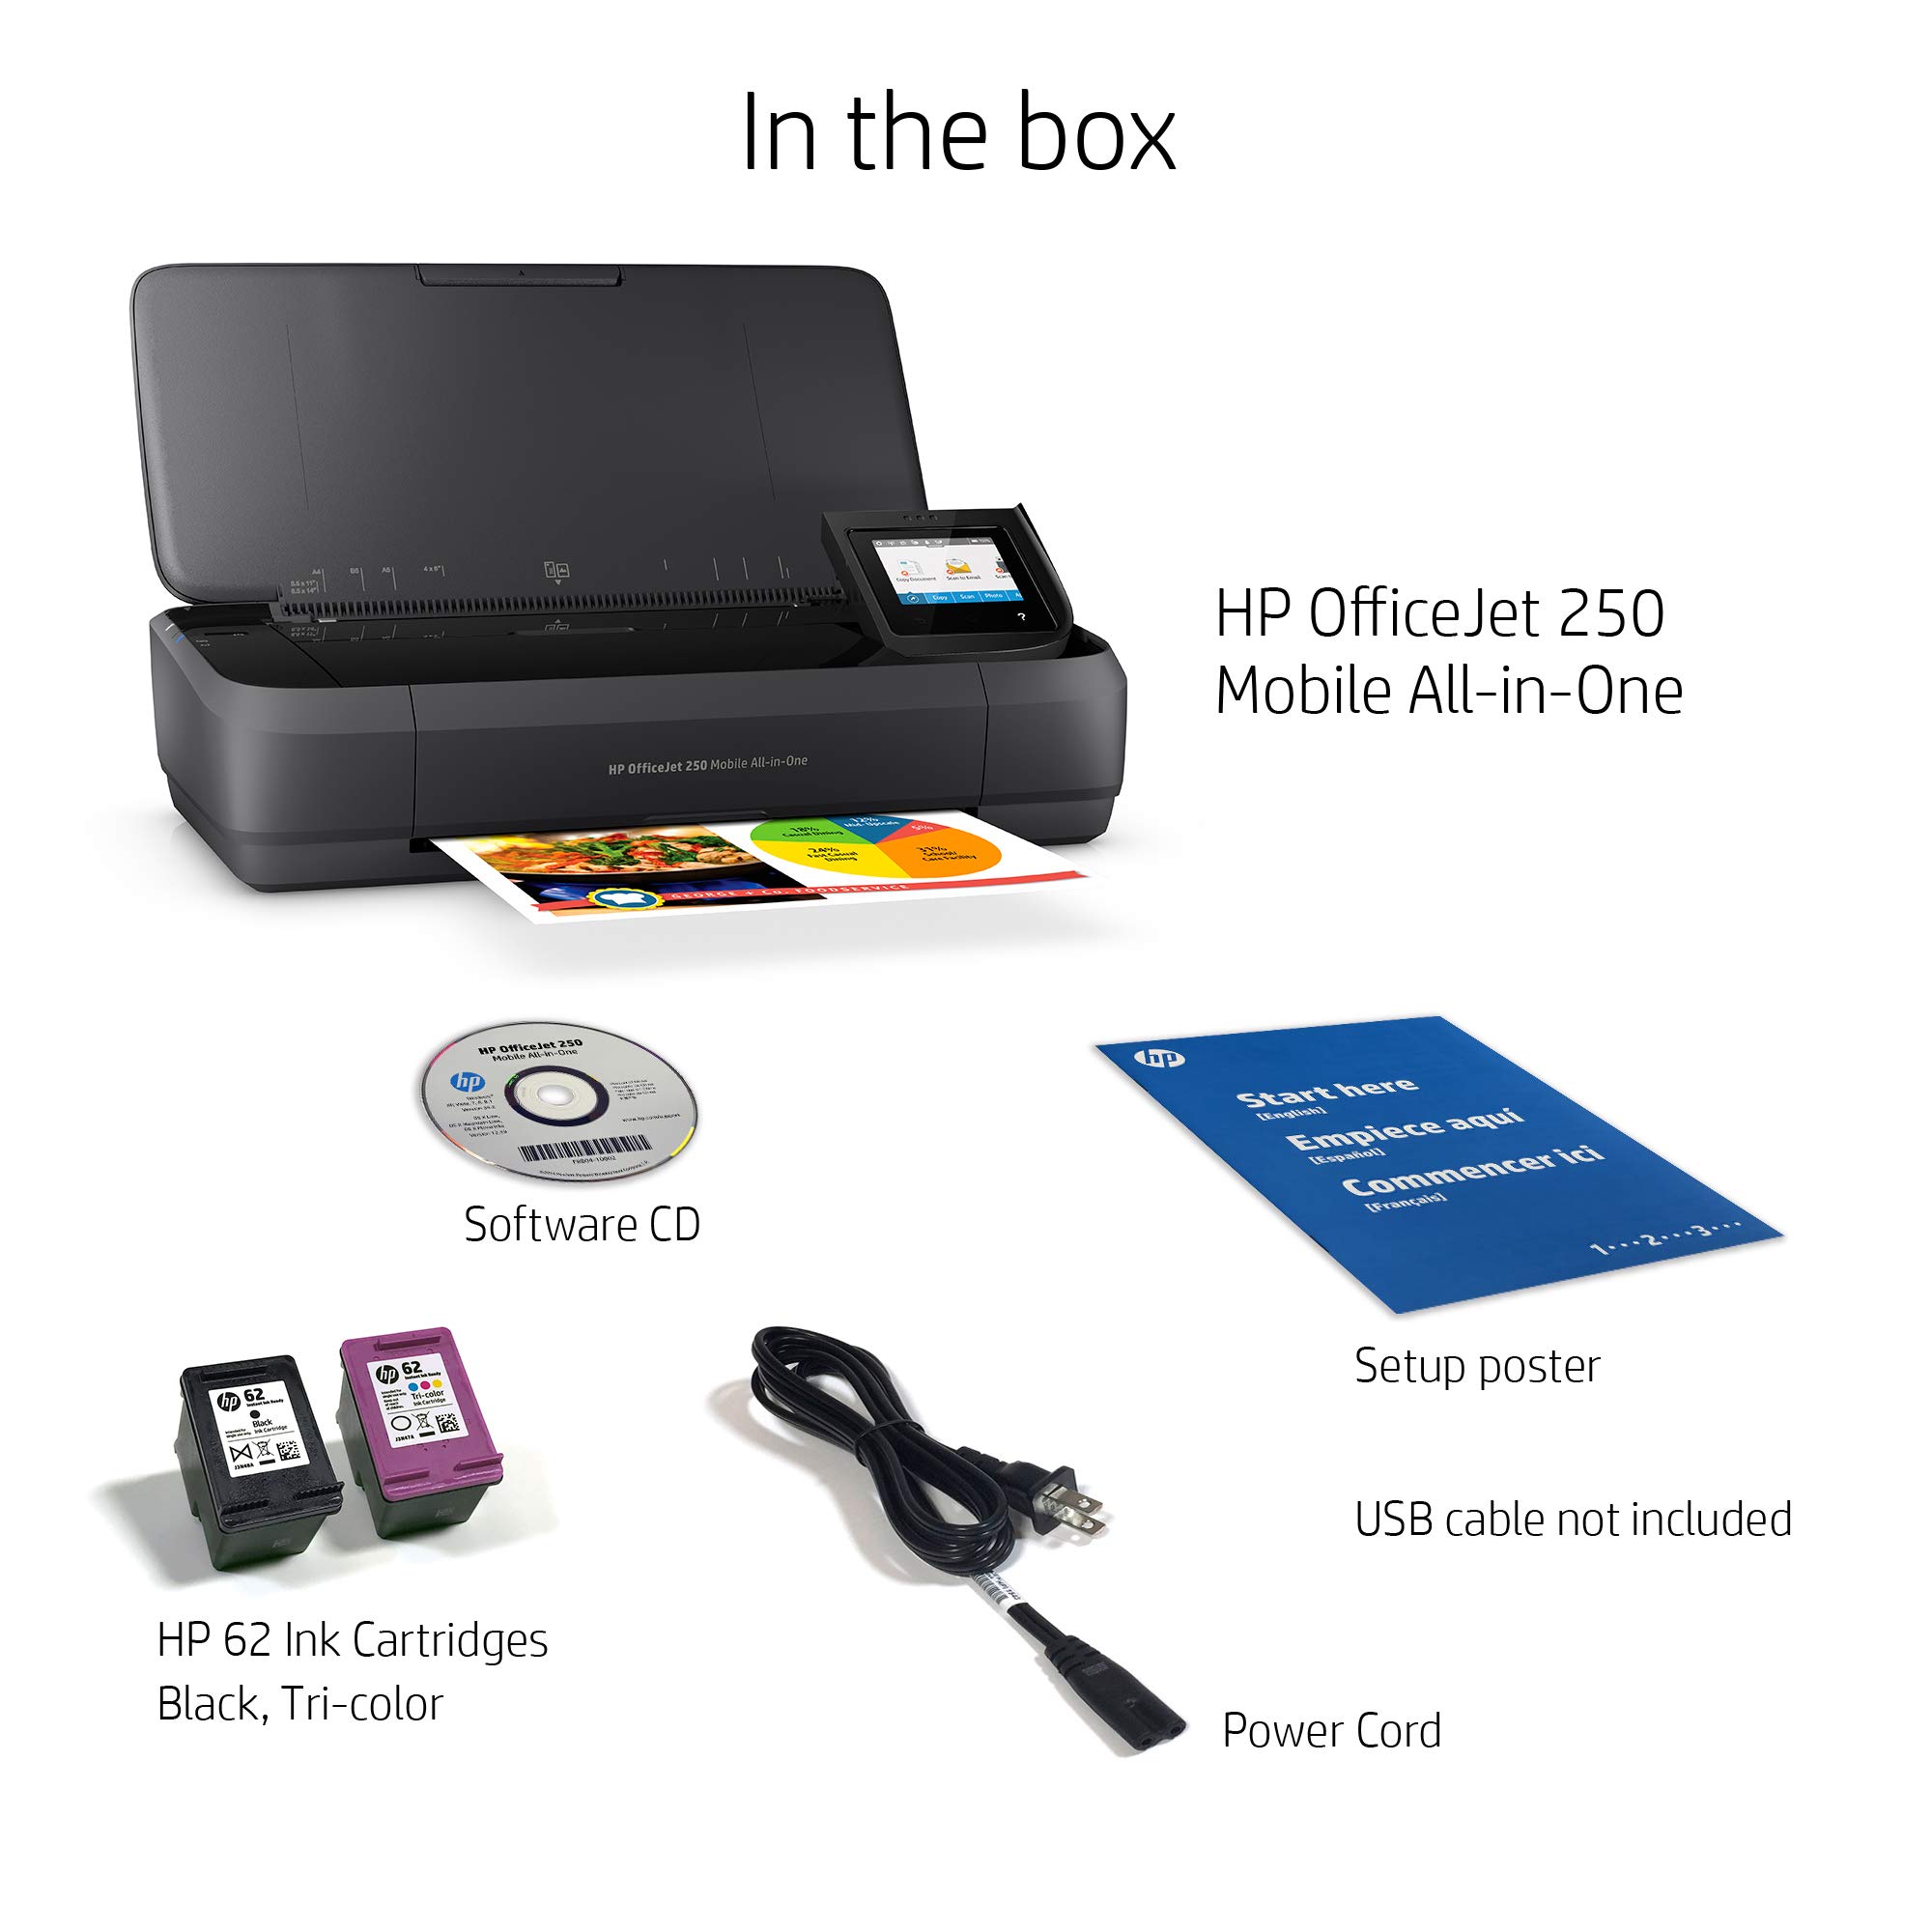 hp officejet 250 mobile printer manual